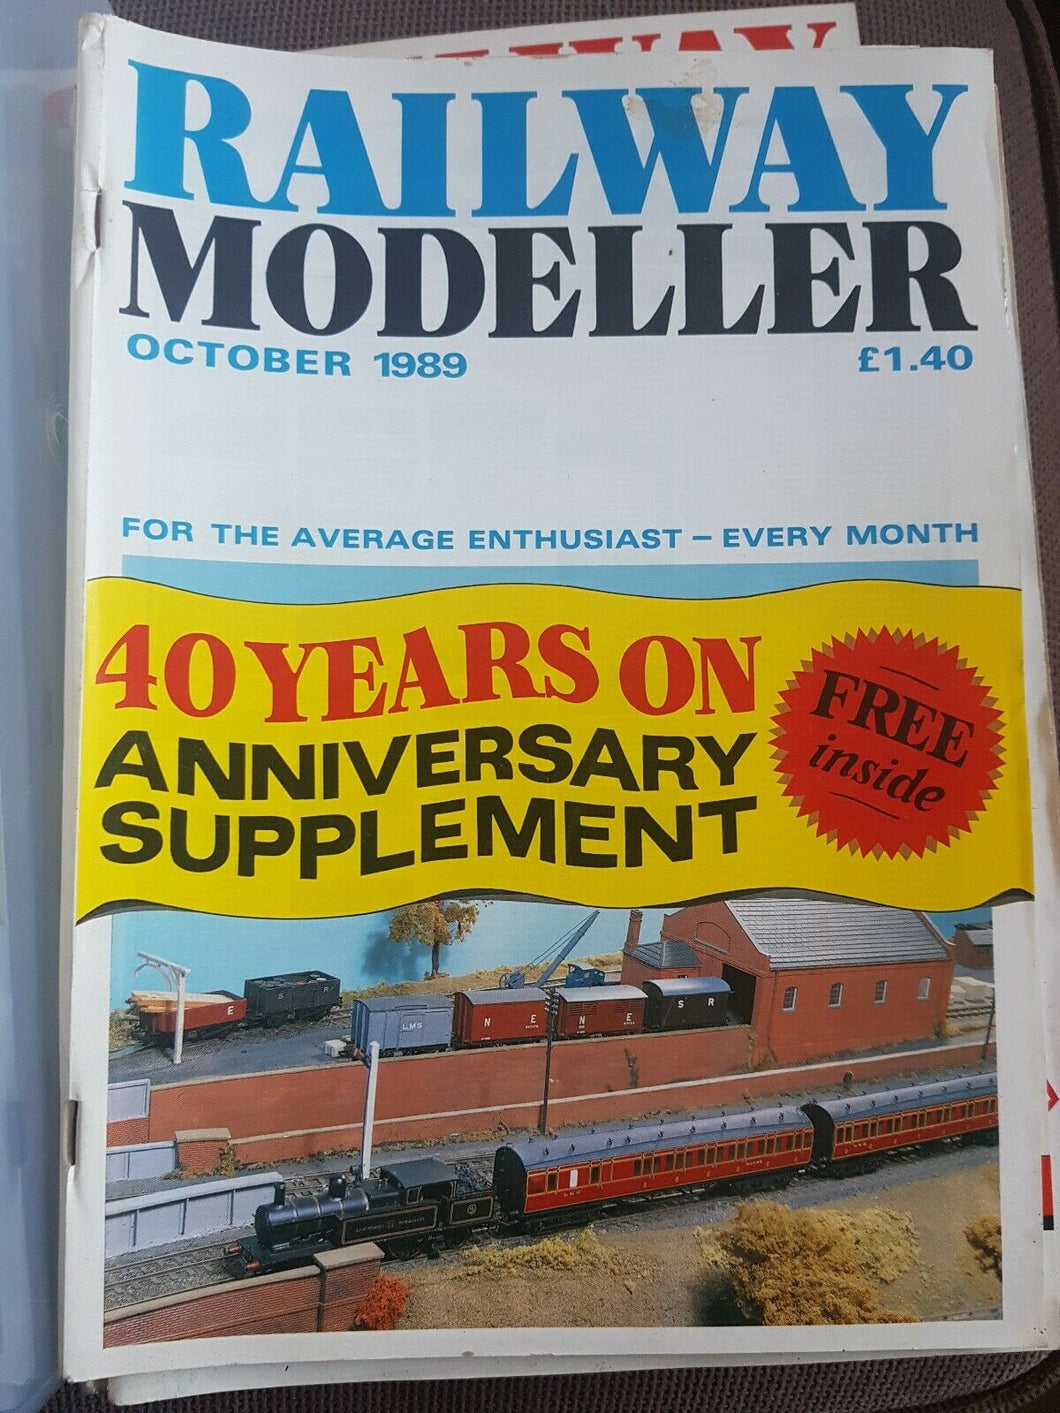 Railway modeller magazine October 1989